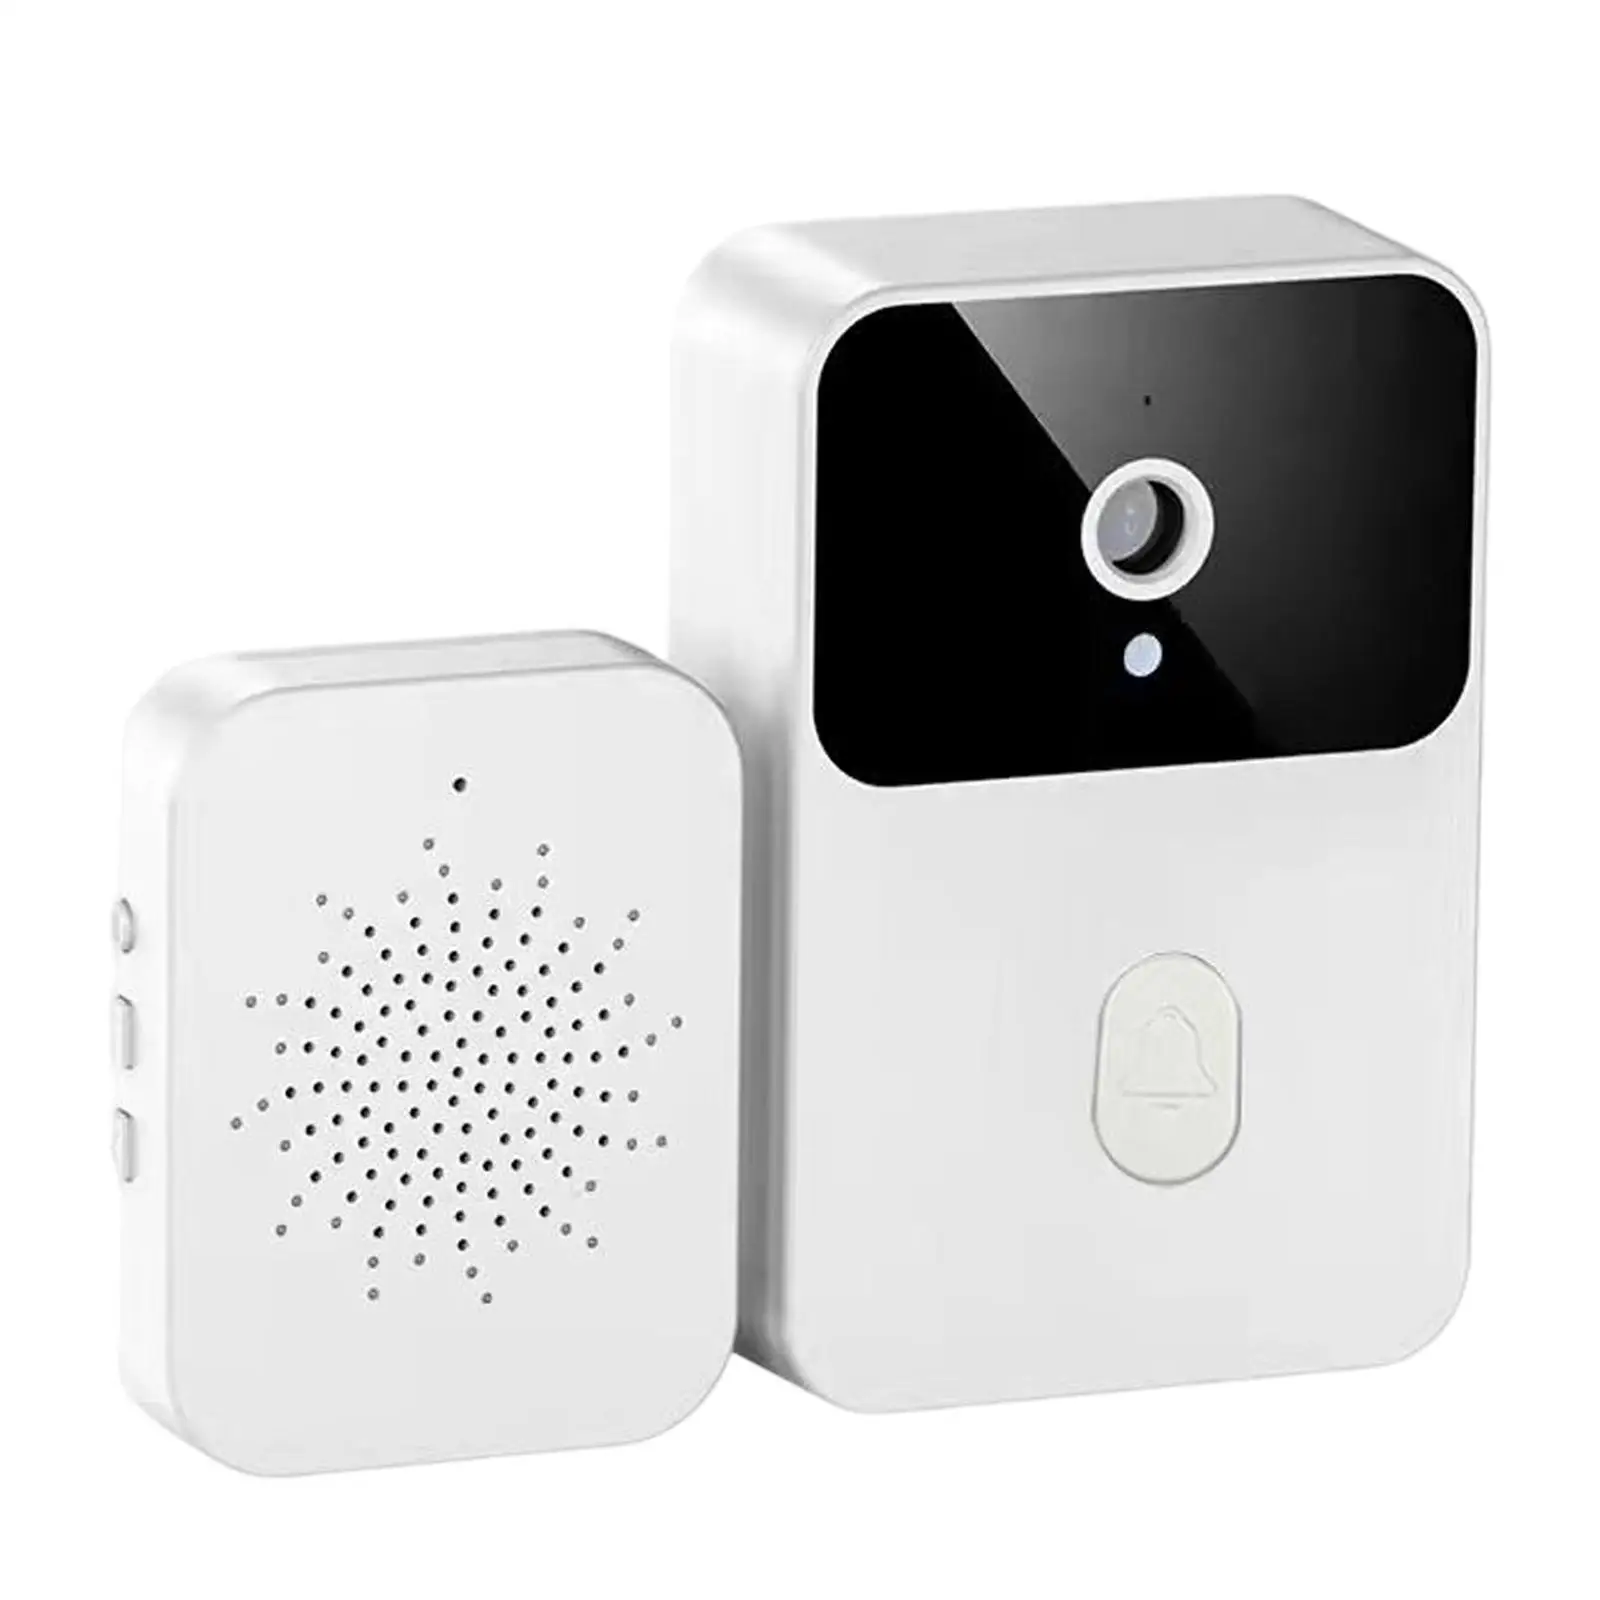 Wireless Doorbell Camera Real Time Video Two Way Audio Easy Install Smart Doorbell for Classroom Playhouse Bedroom Office School